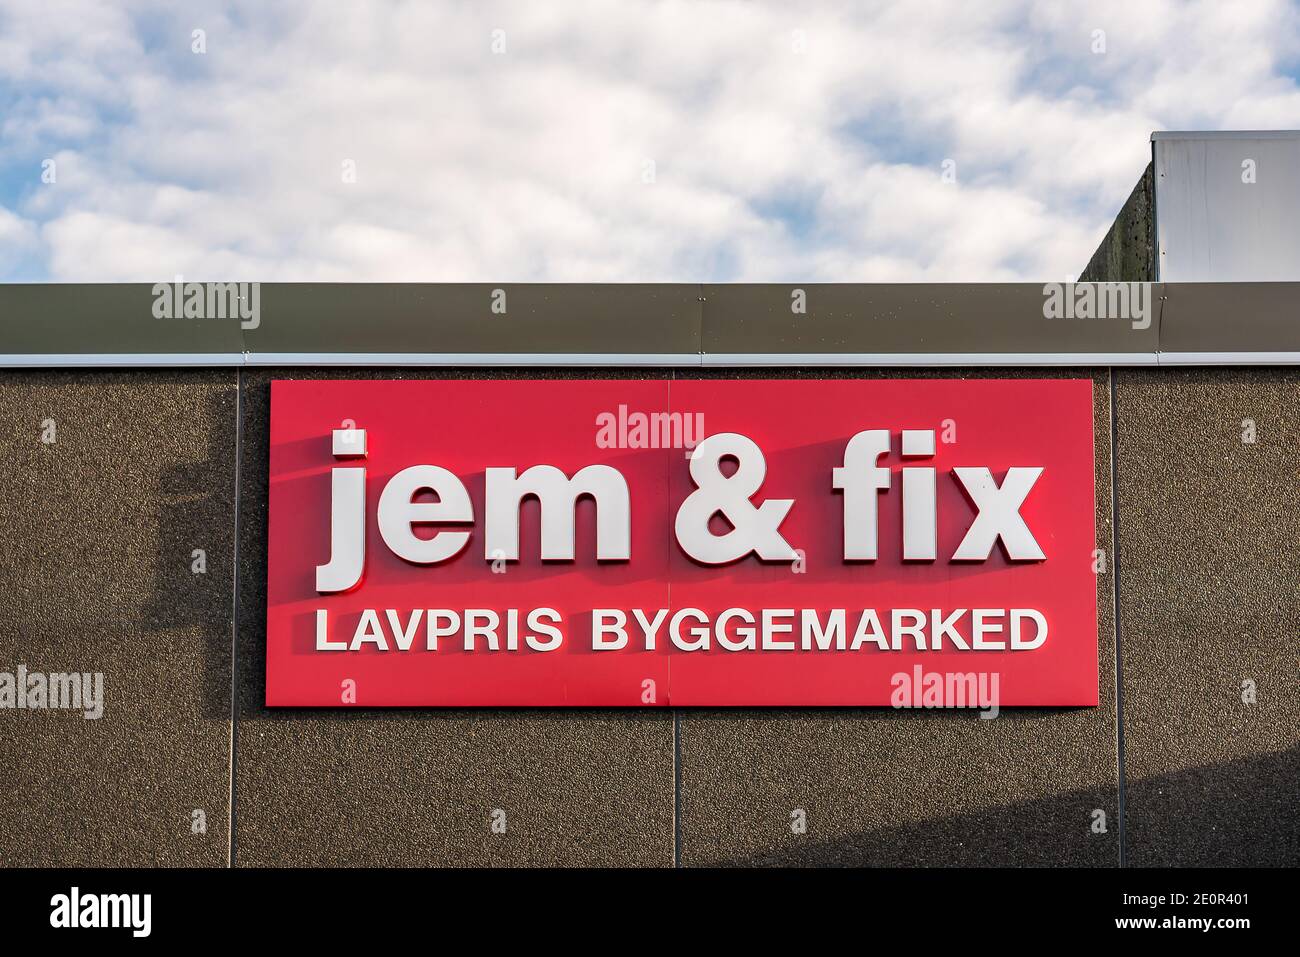 jem & fix lavpris byggemarked sign on  a grey building, Denmark, January 2, 2021 Stock Photo